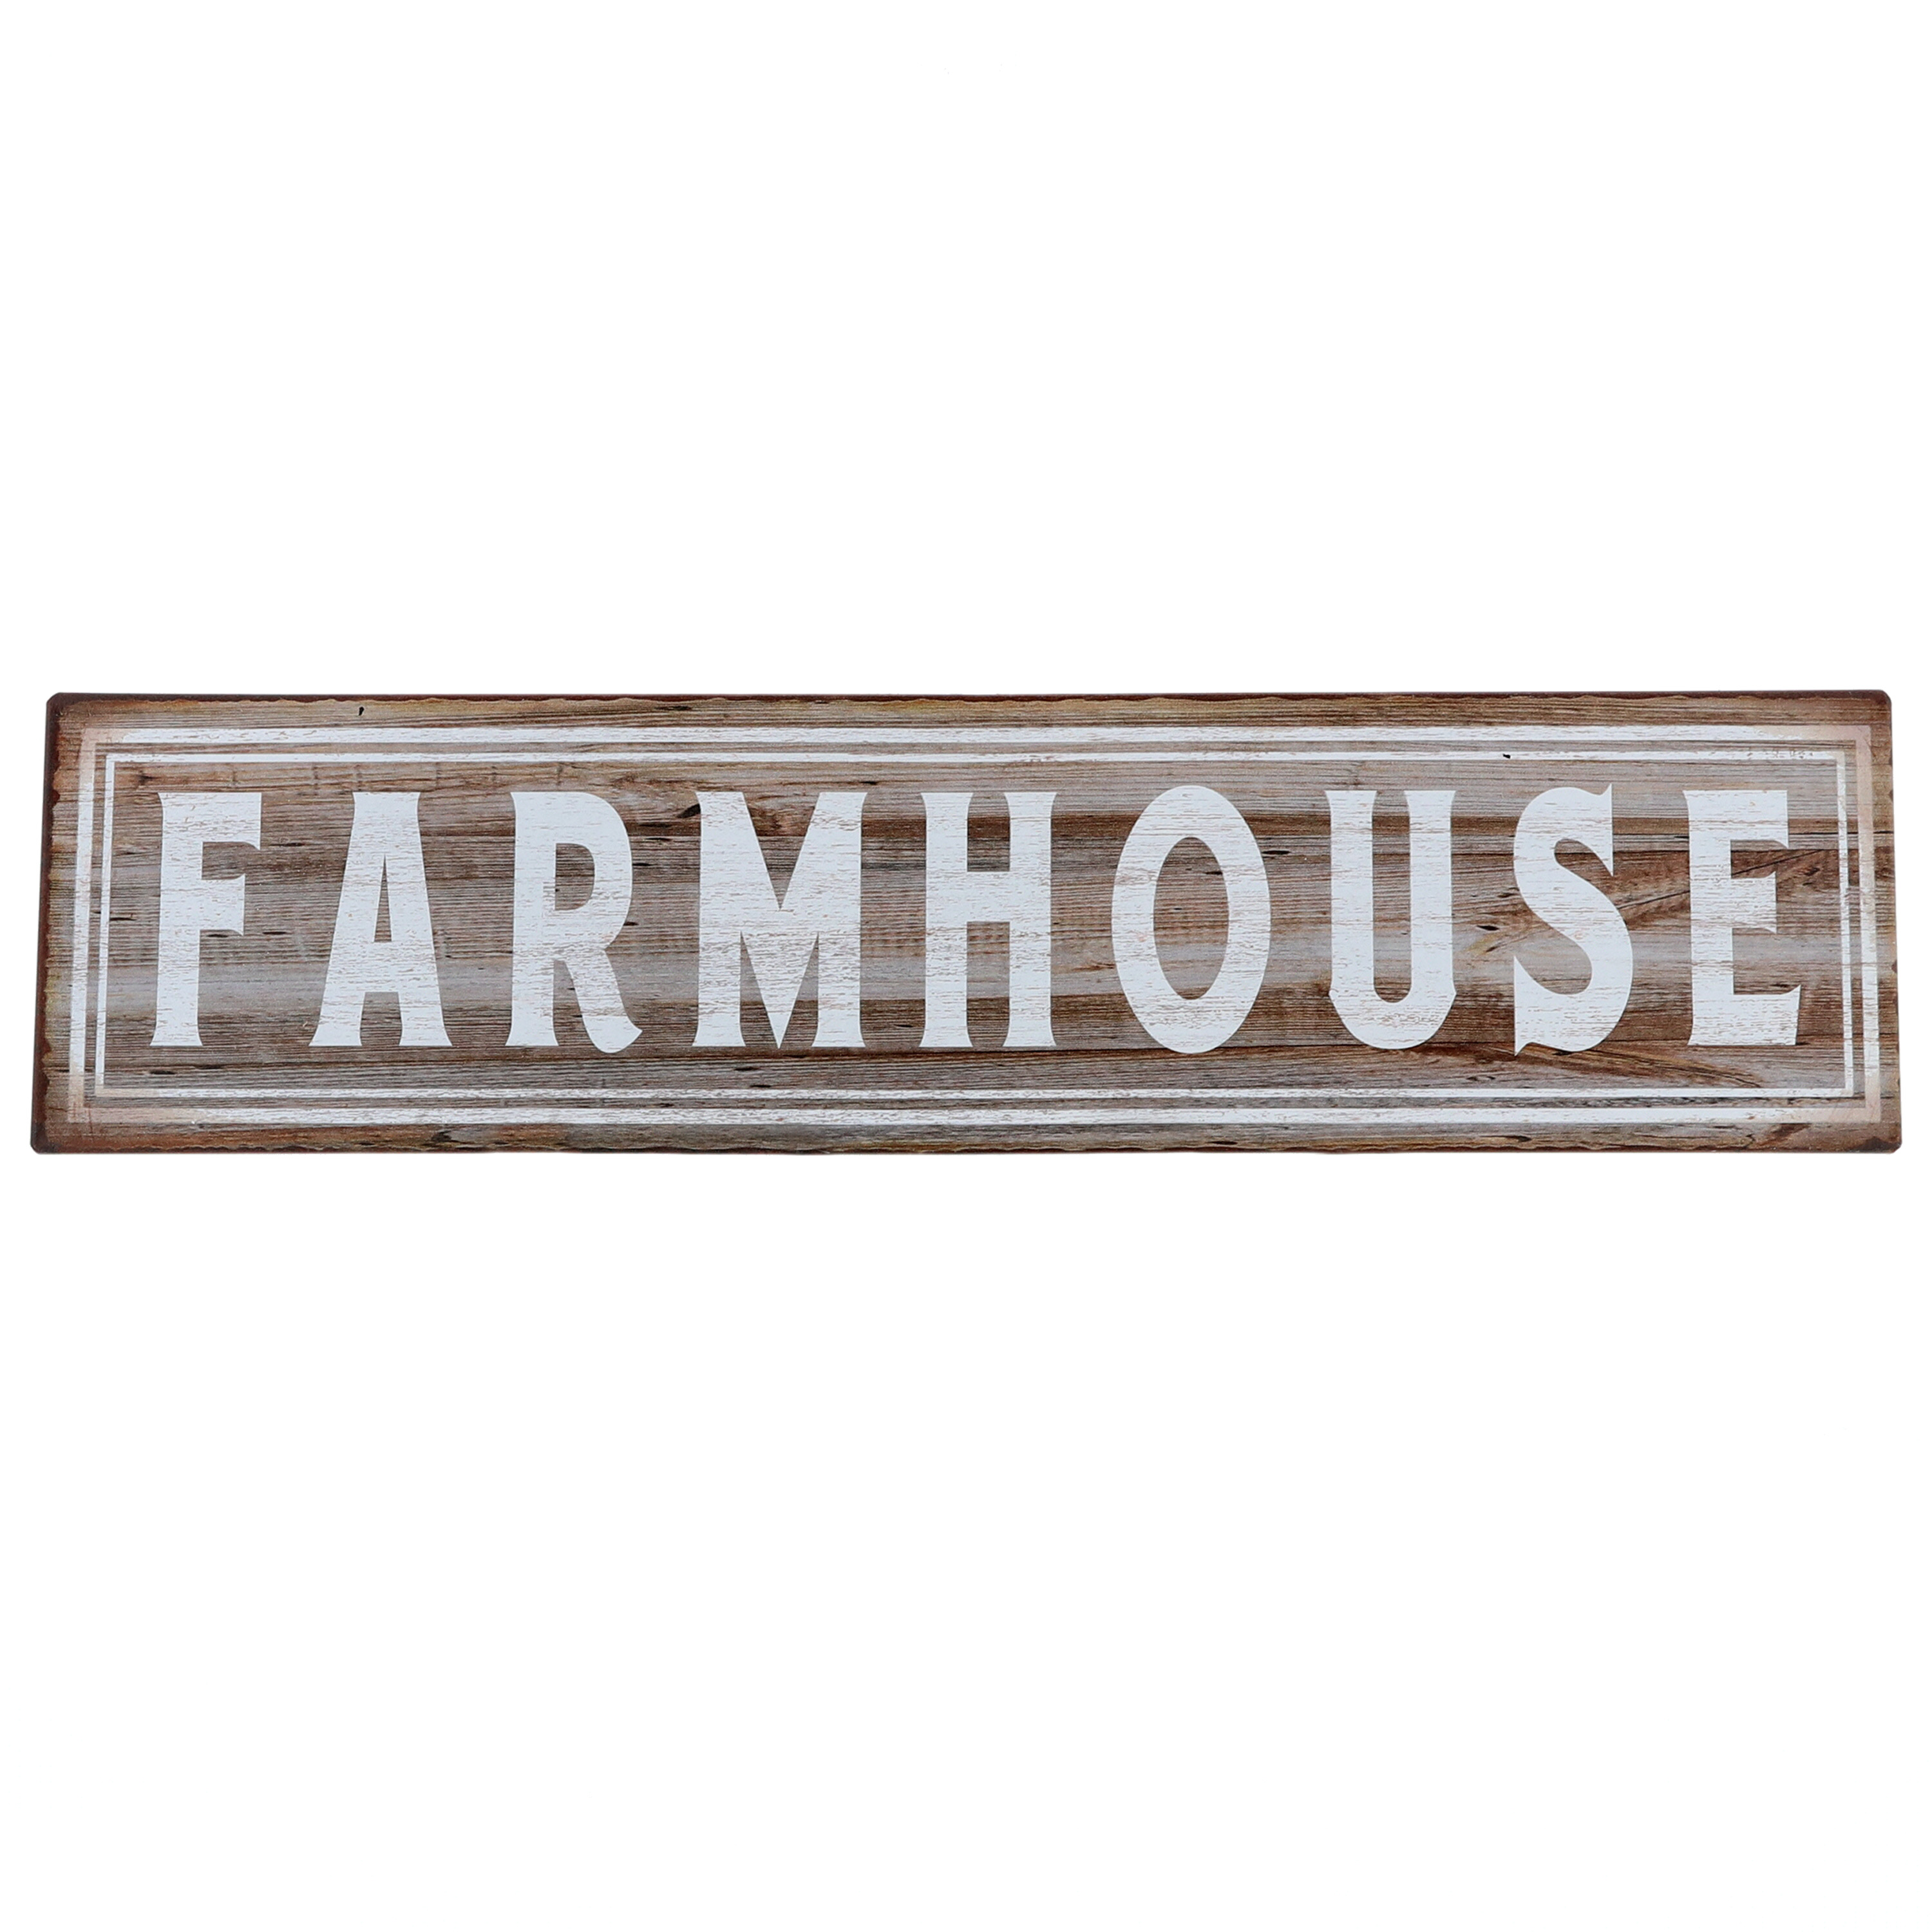 Barnyard Designs Farmhouse Retro Vintage Metal Tin Bar Sign, Decorative Wall Art Signage, Primitive Farmhouse Country Kitchen Home Décor, 15.75" x 4" - image 1 of 6